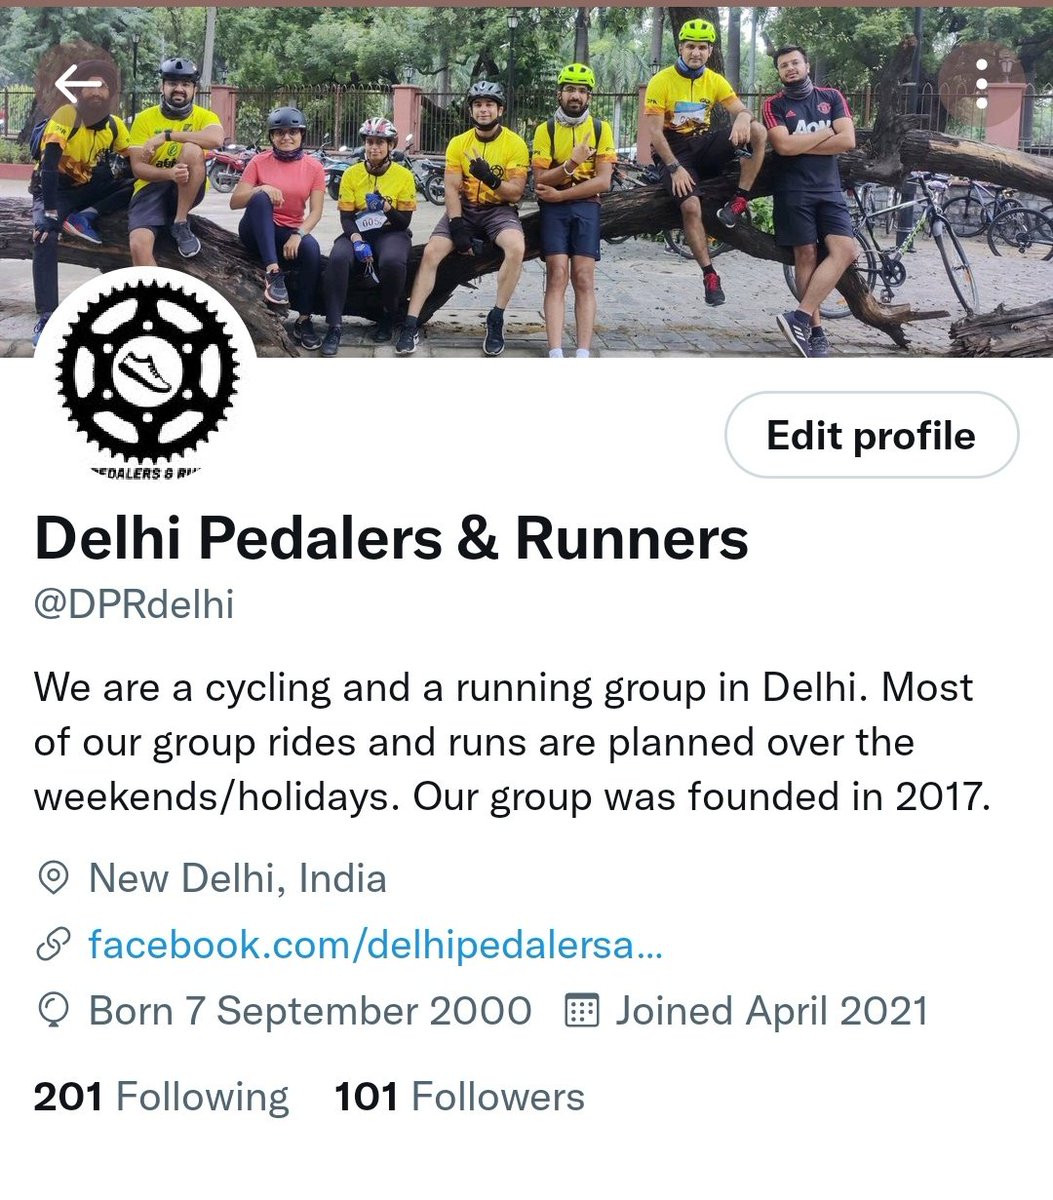 Scored Century 😊 100 followers.

Keep sharing 🙏 

#Cycling #GreenTransport #CleanAir #CycleToWork #SaveEnvironment #ClimateAction #PlantTrees #ControlPollution #GoGreen #DelhiPedalersAndRunners #KeepYourCityClean